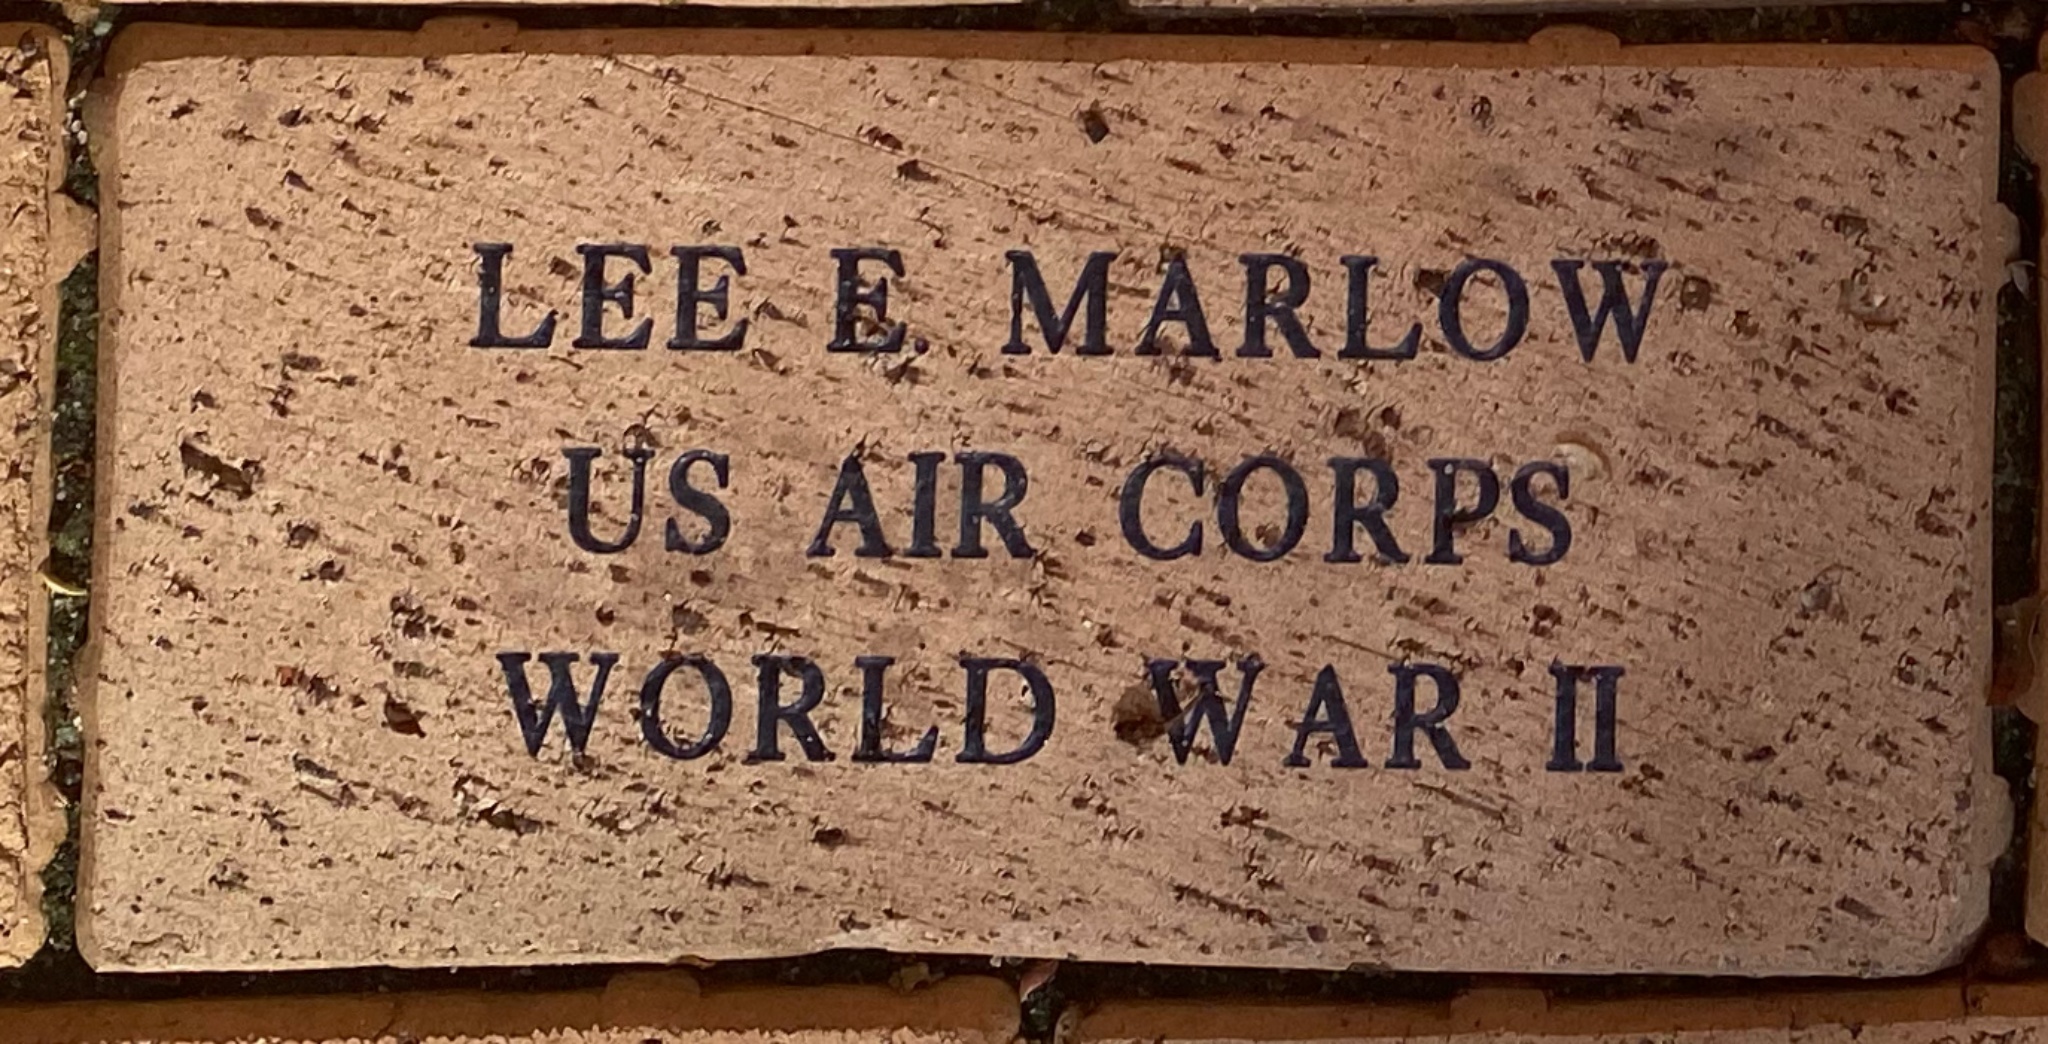 LEE E. MARLOW US AIR CORPS WORLD WAR II